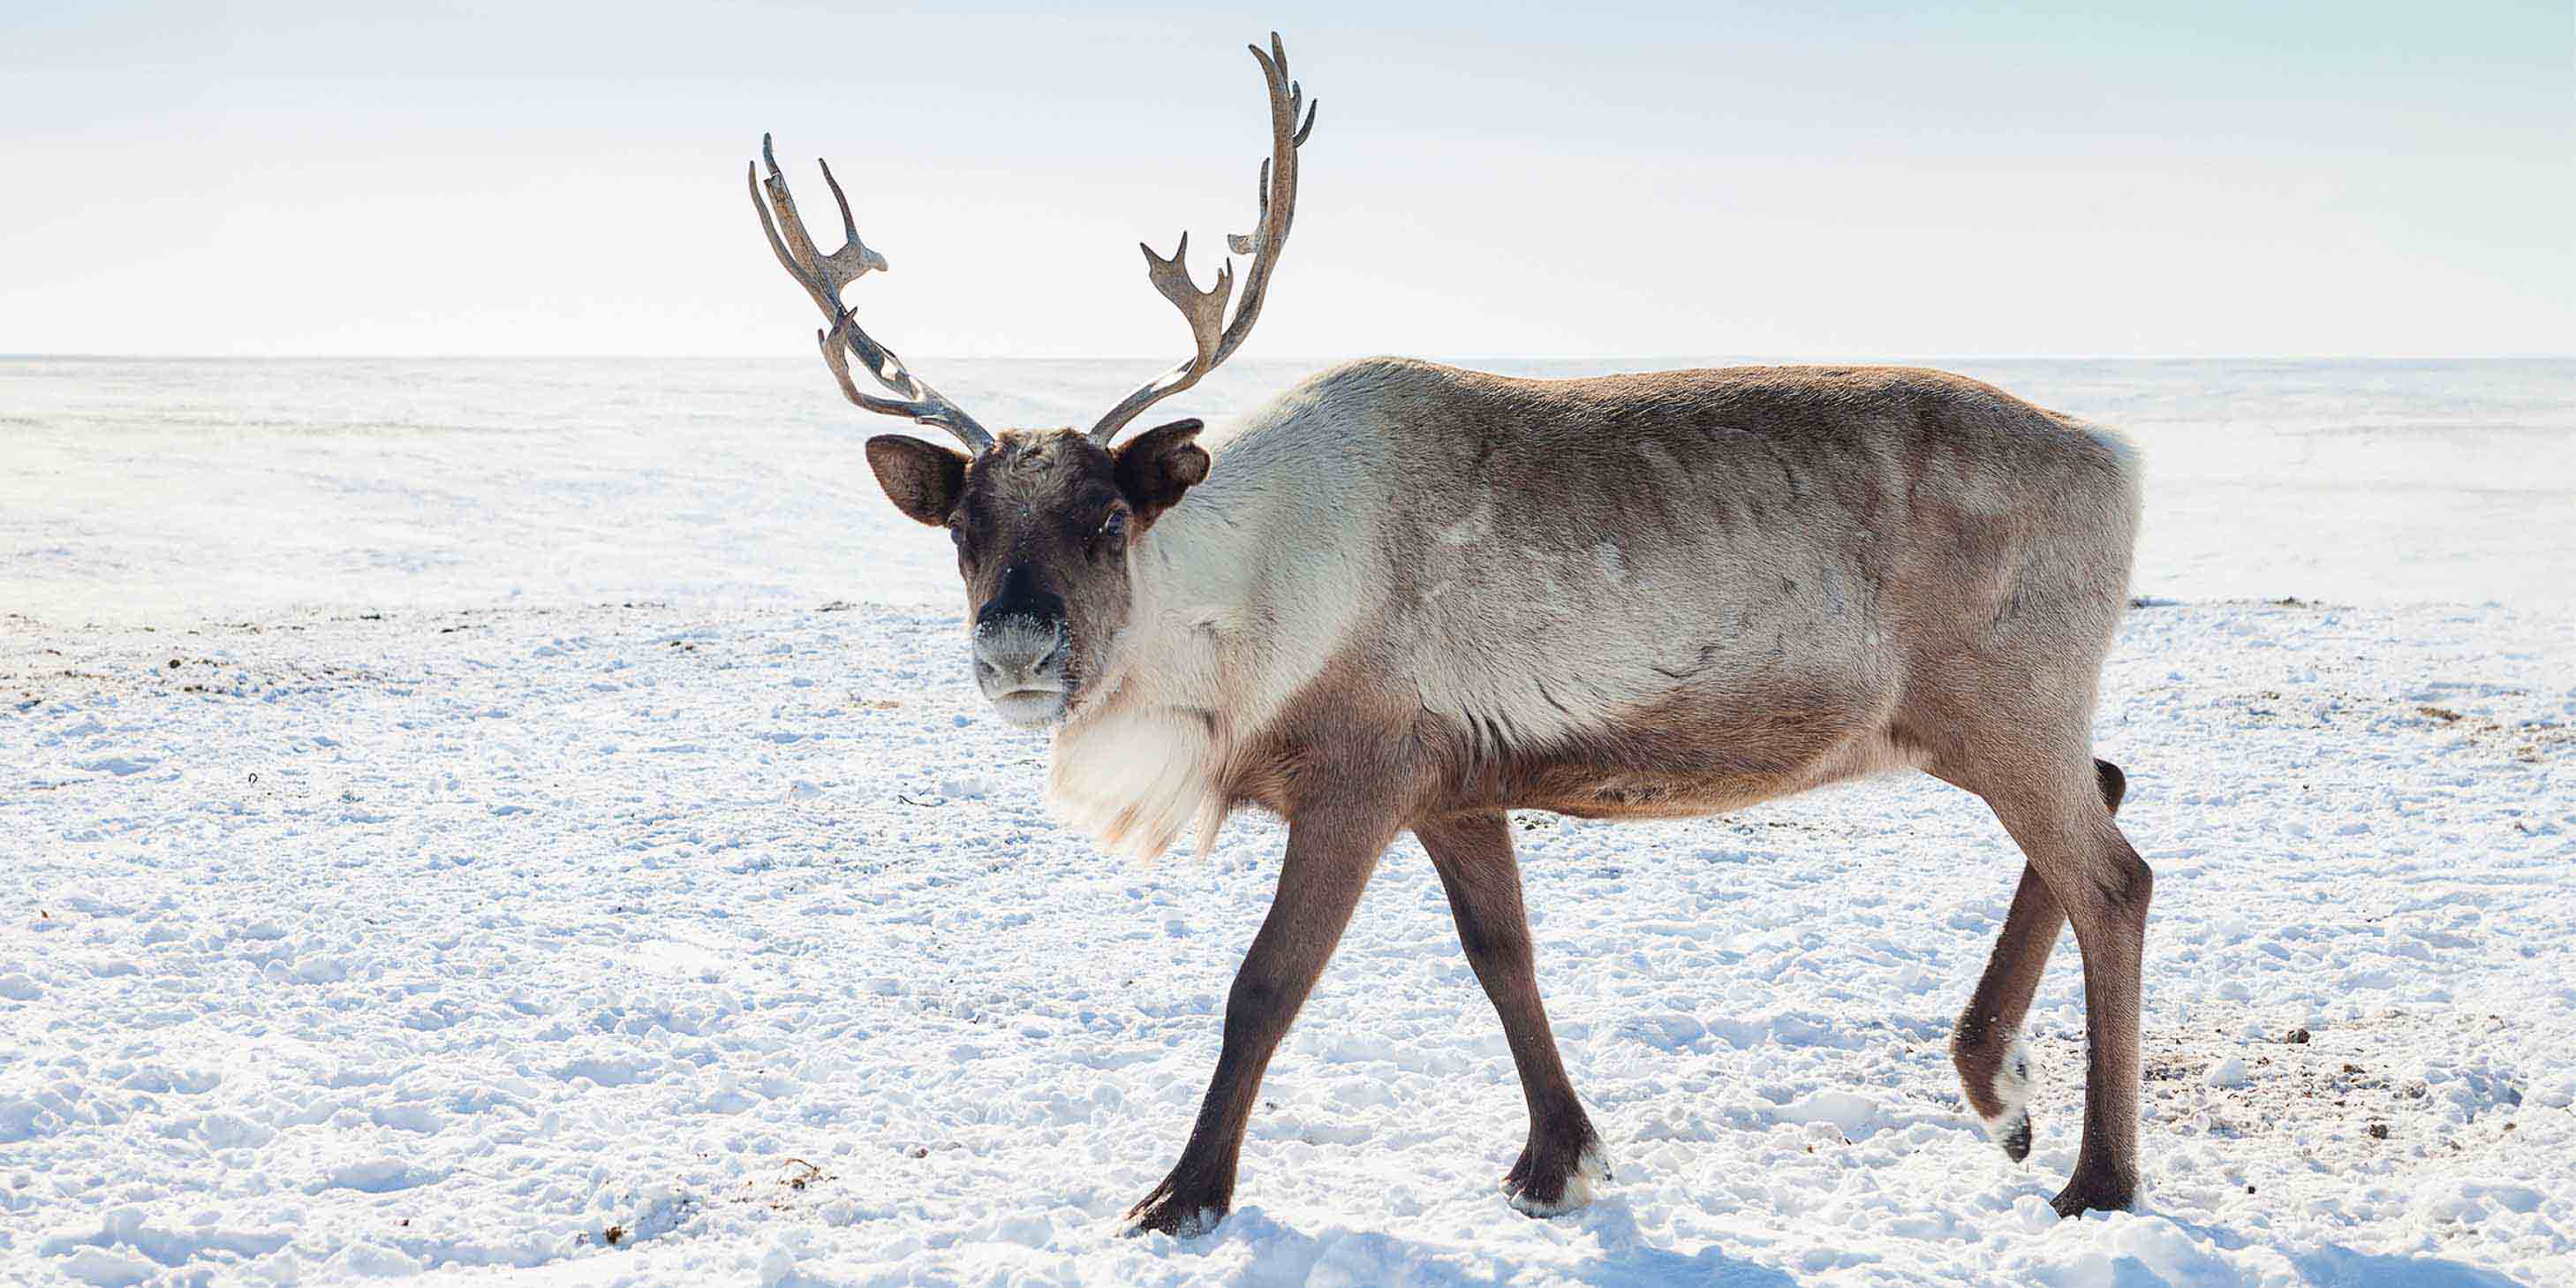 A reindeer walking in the snow.